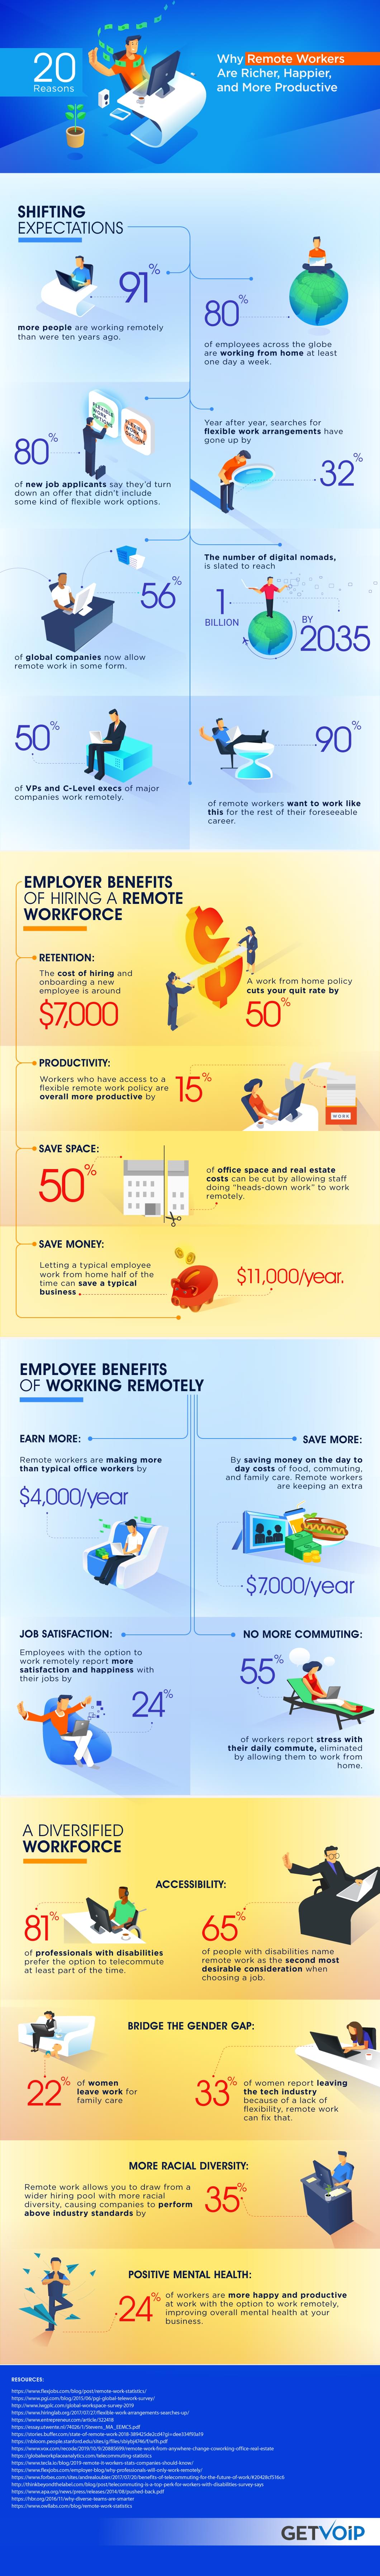 remote work stats